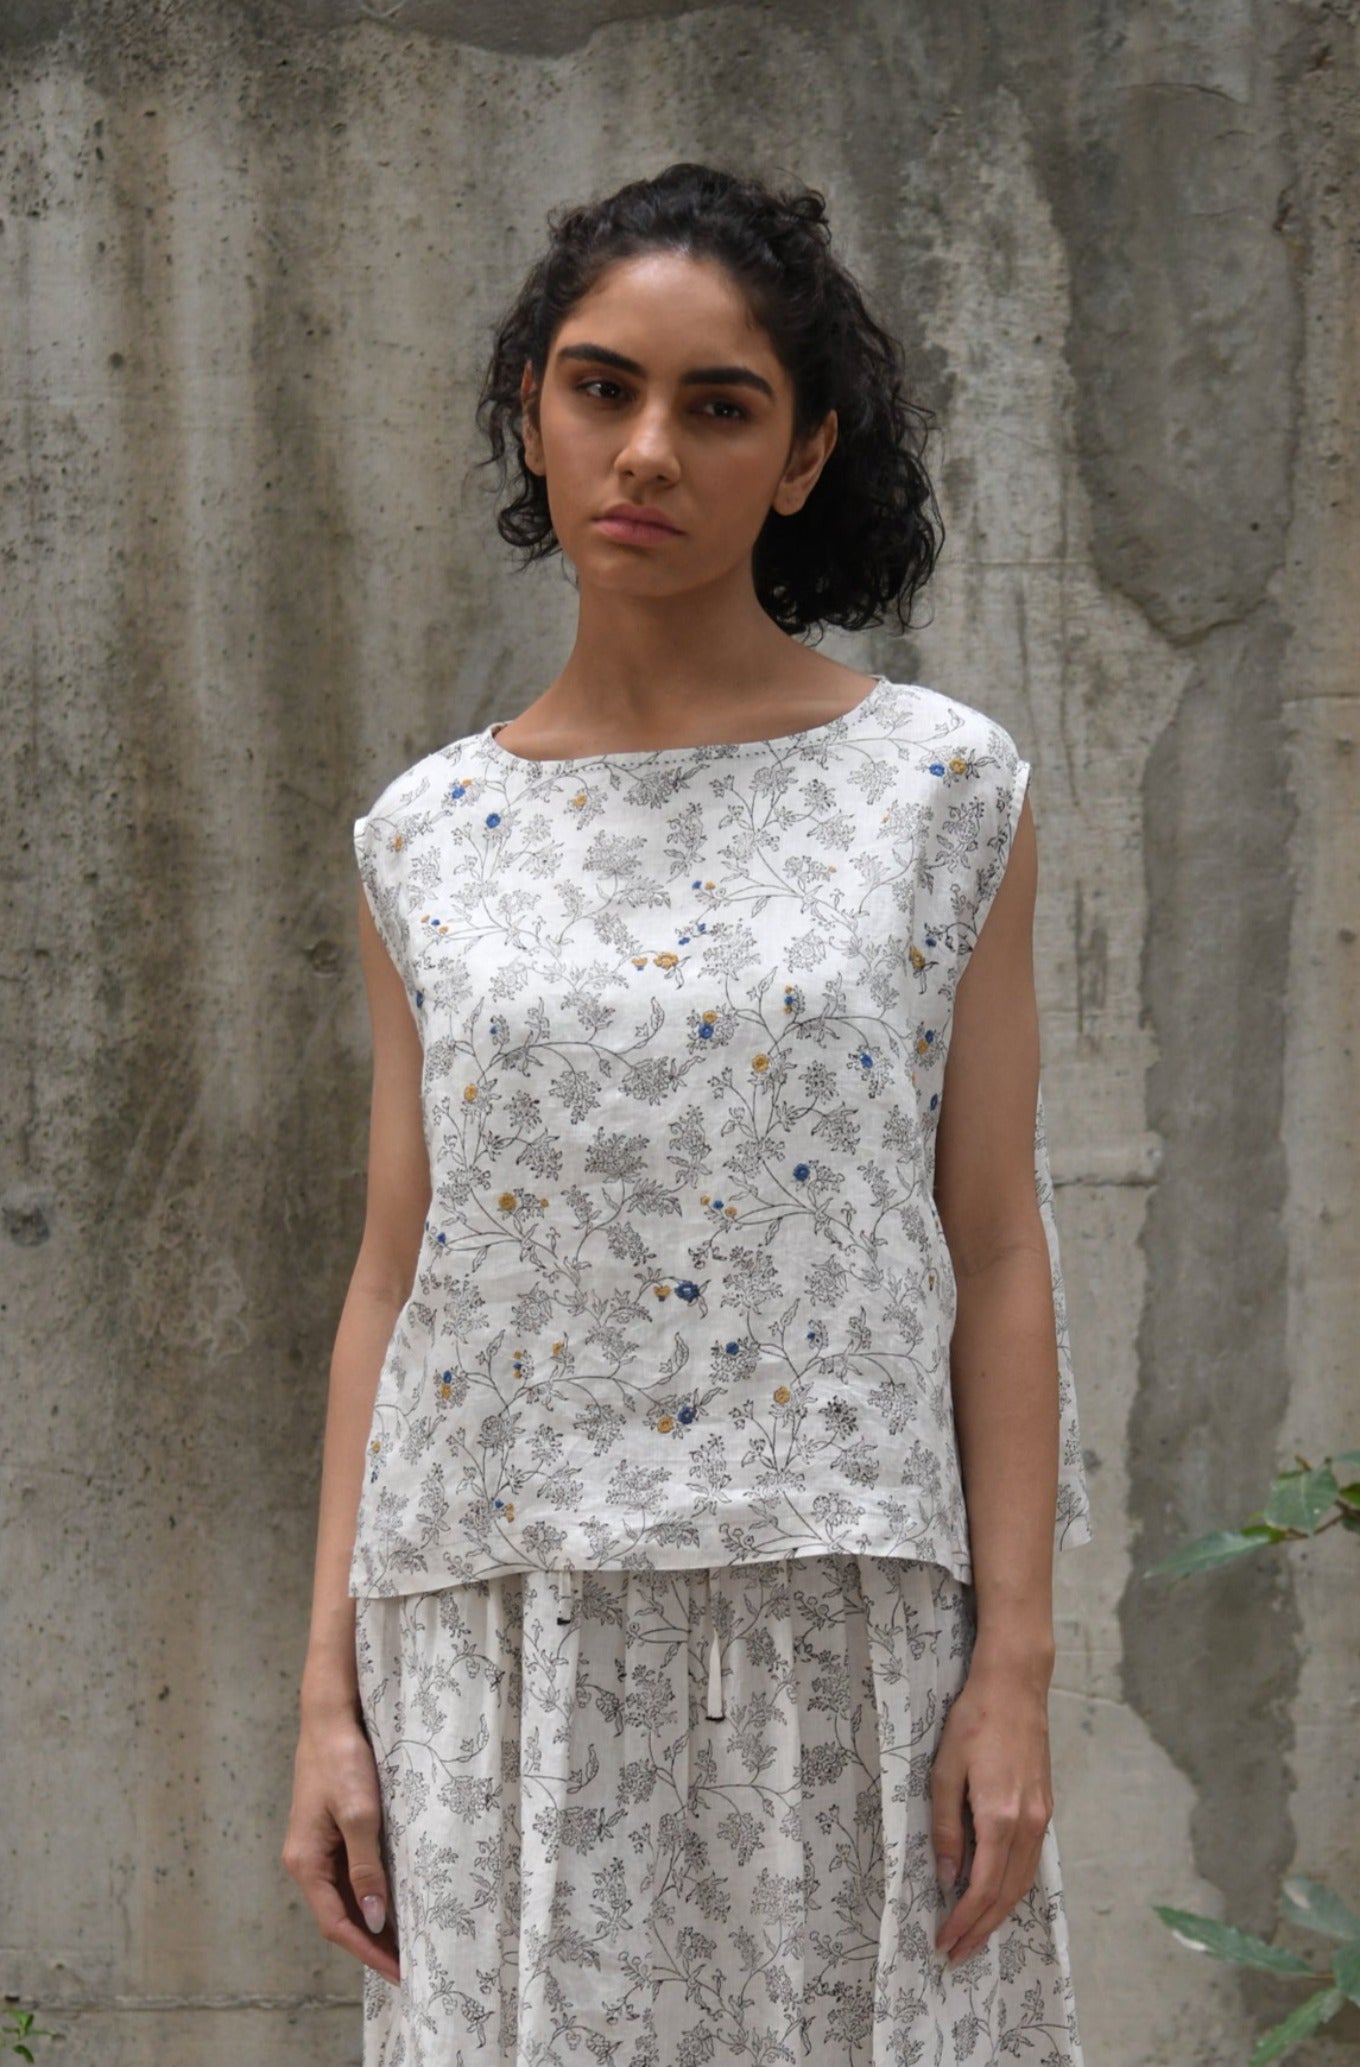 DVE Aishani one size sleeveless boxy fit linen top, blockprinted on ecru.